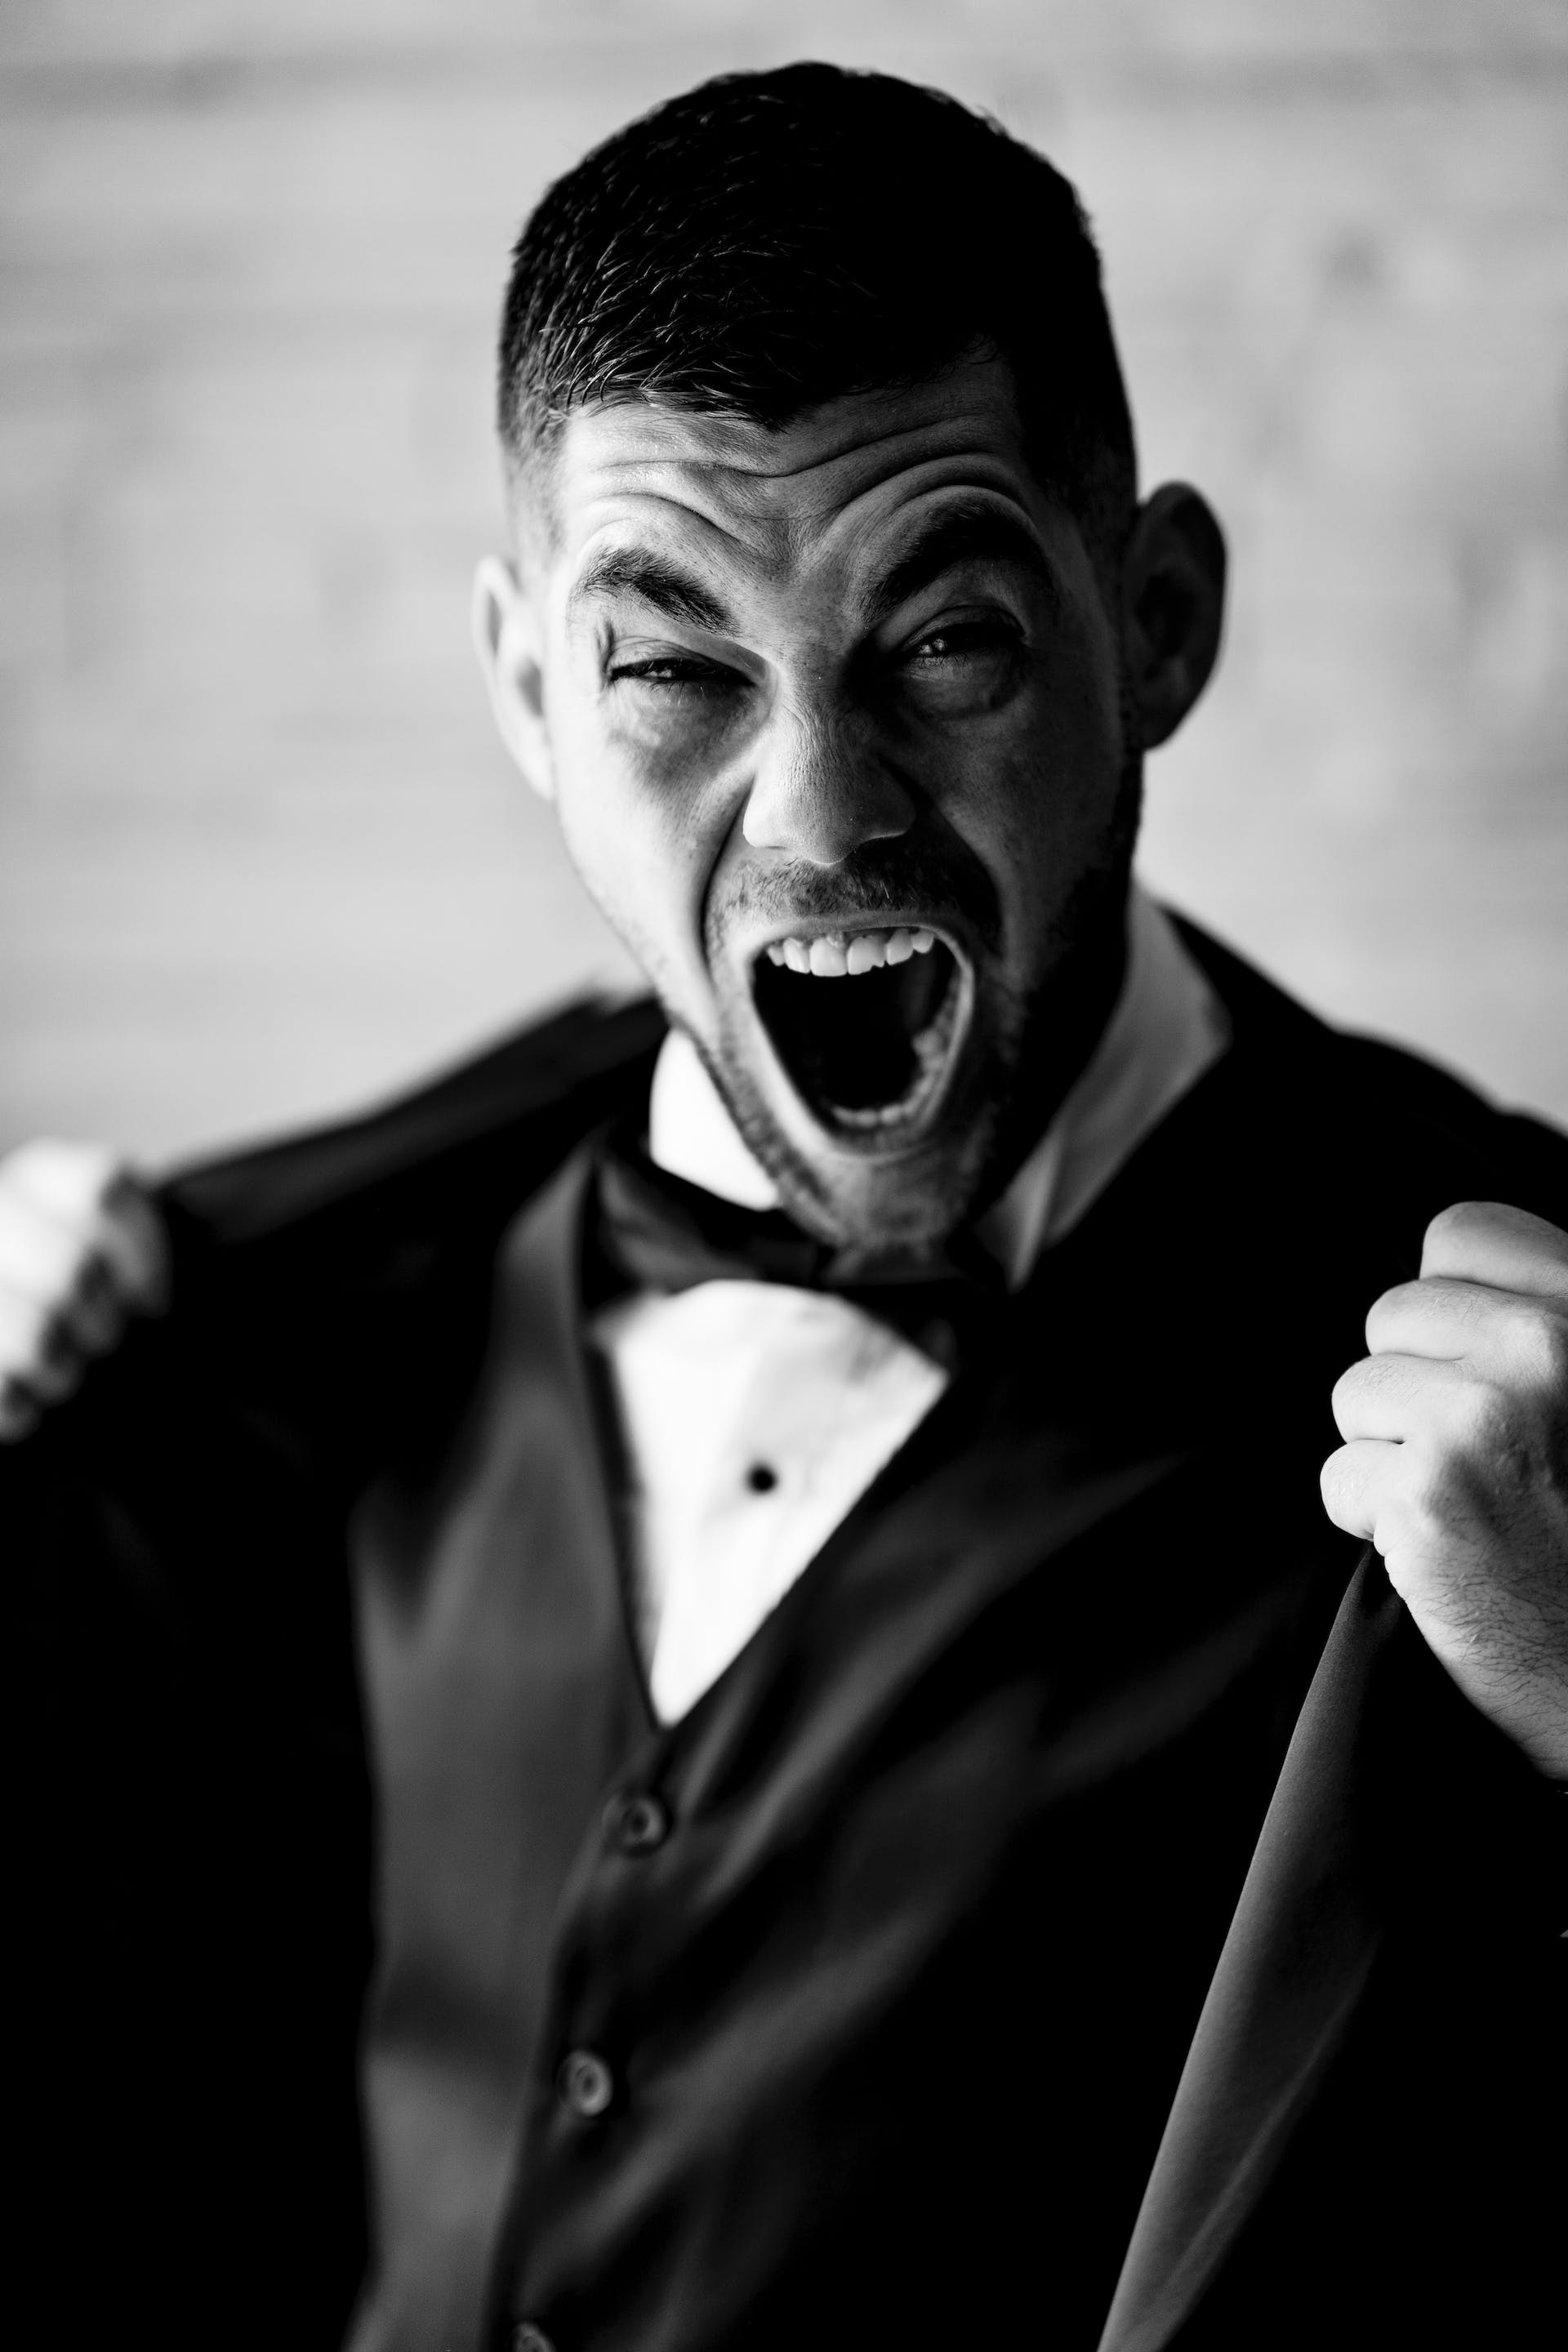 Angry groom shouting | Source: Pexels